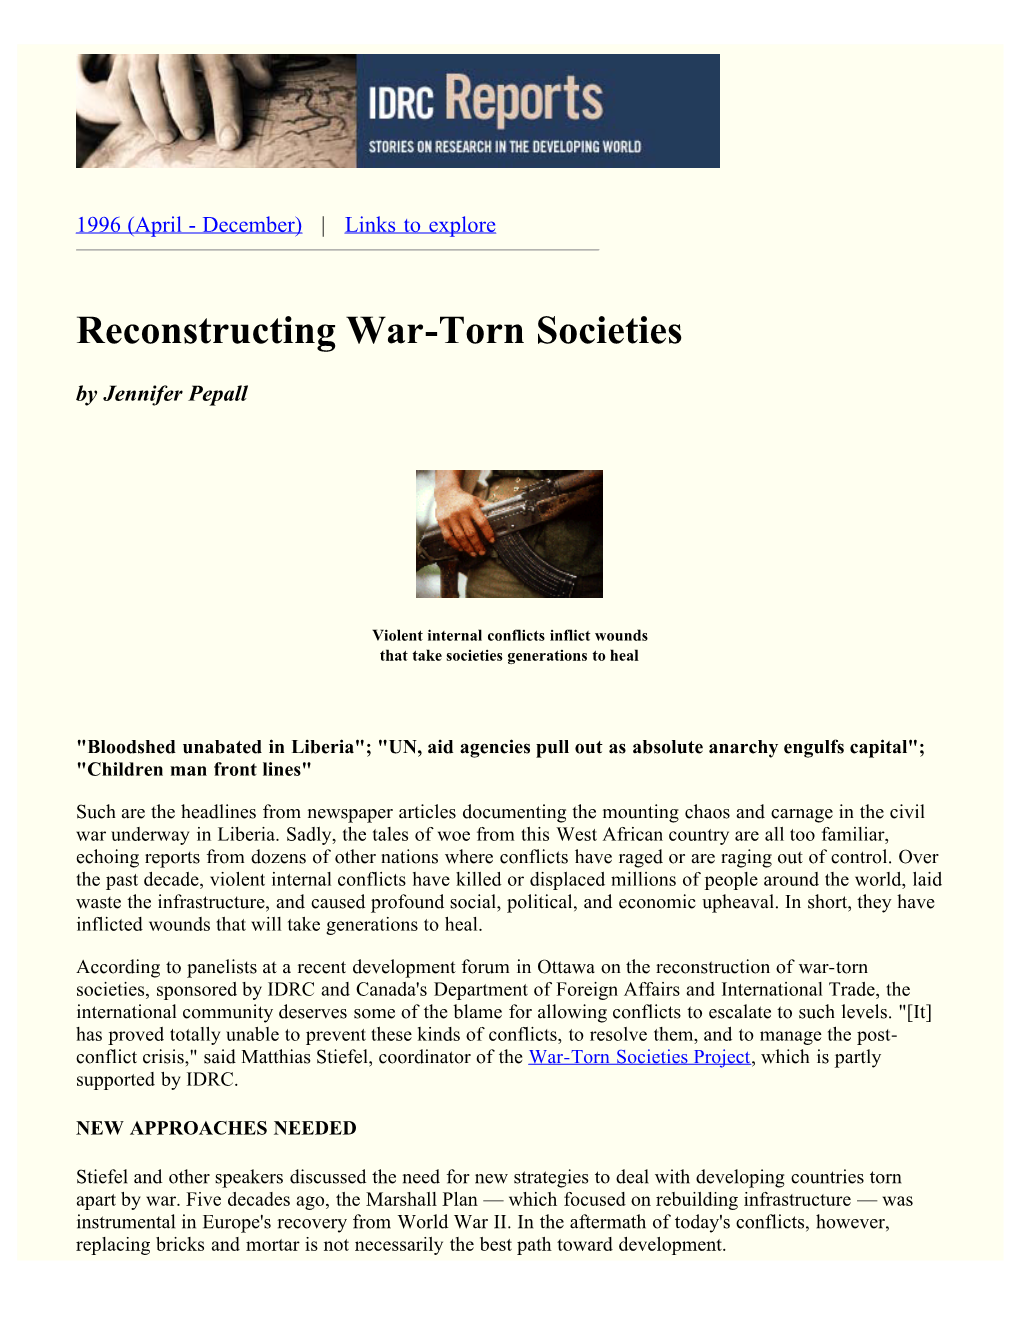 Reconstructing War-Torn Societies by Jennifer Pepall